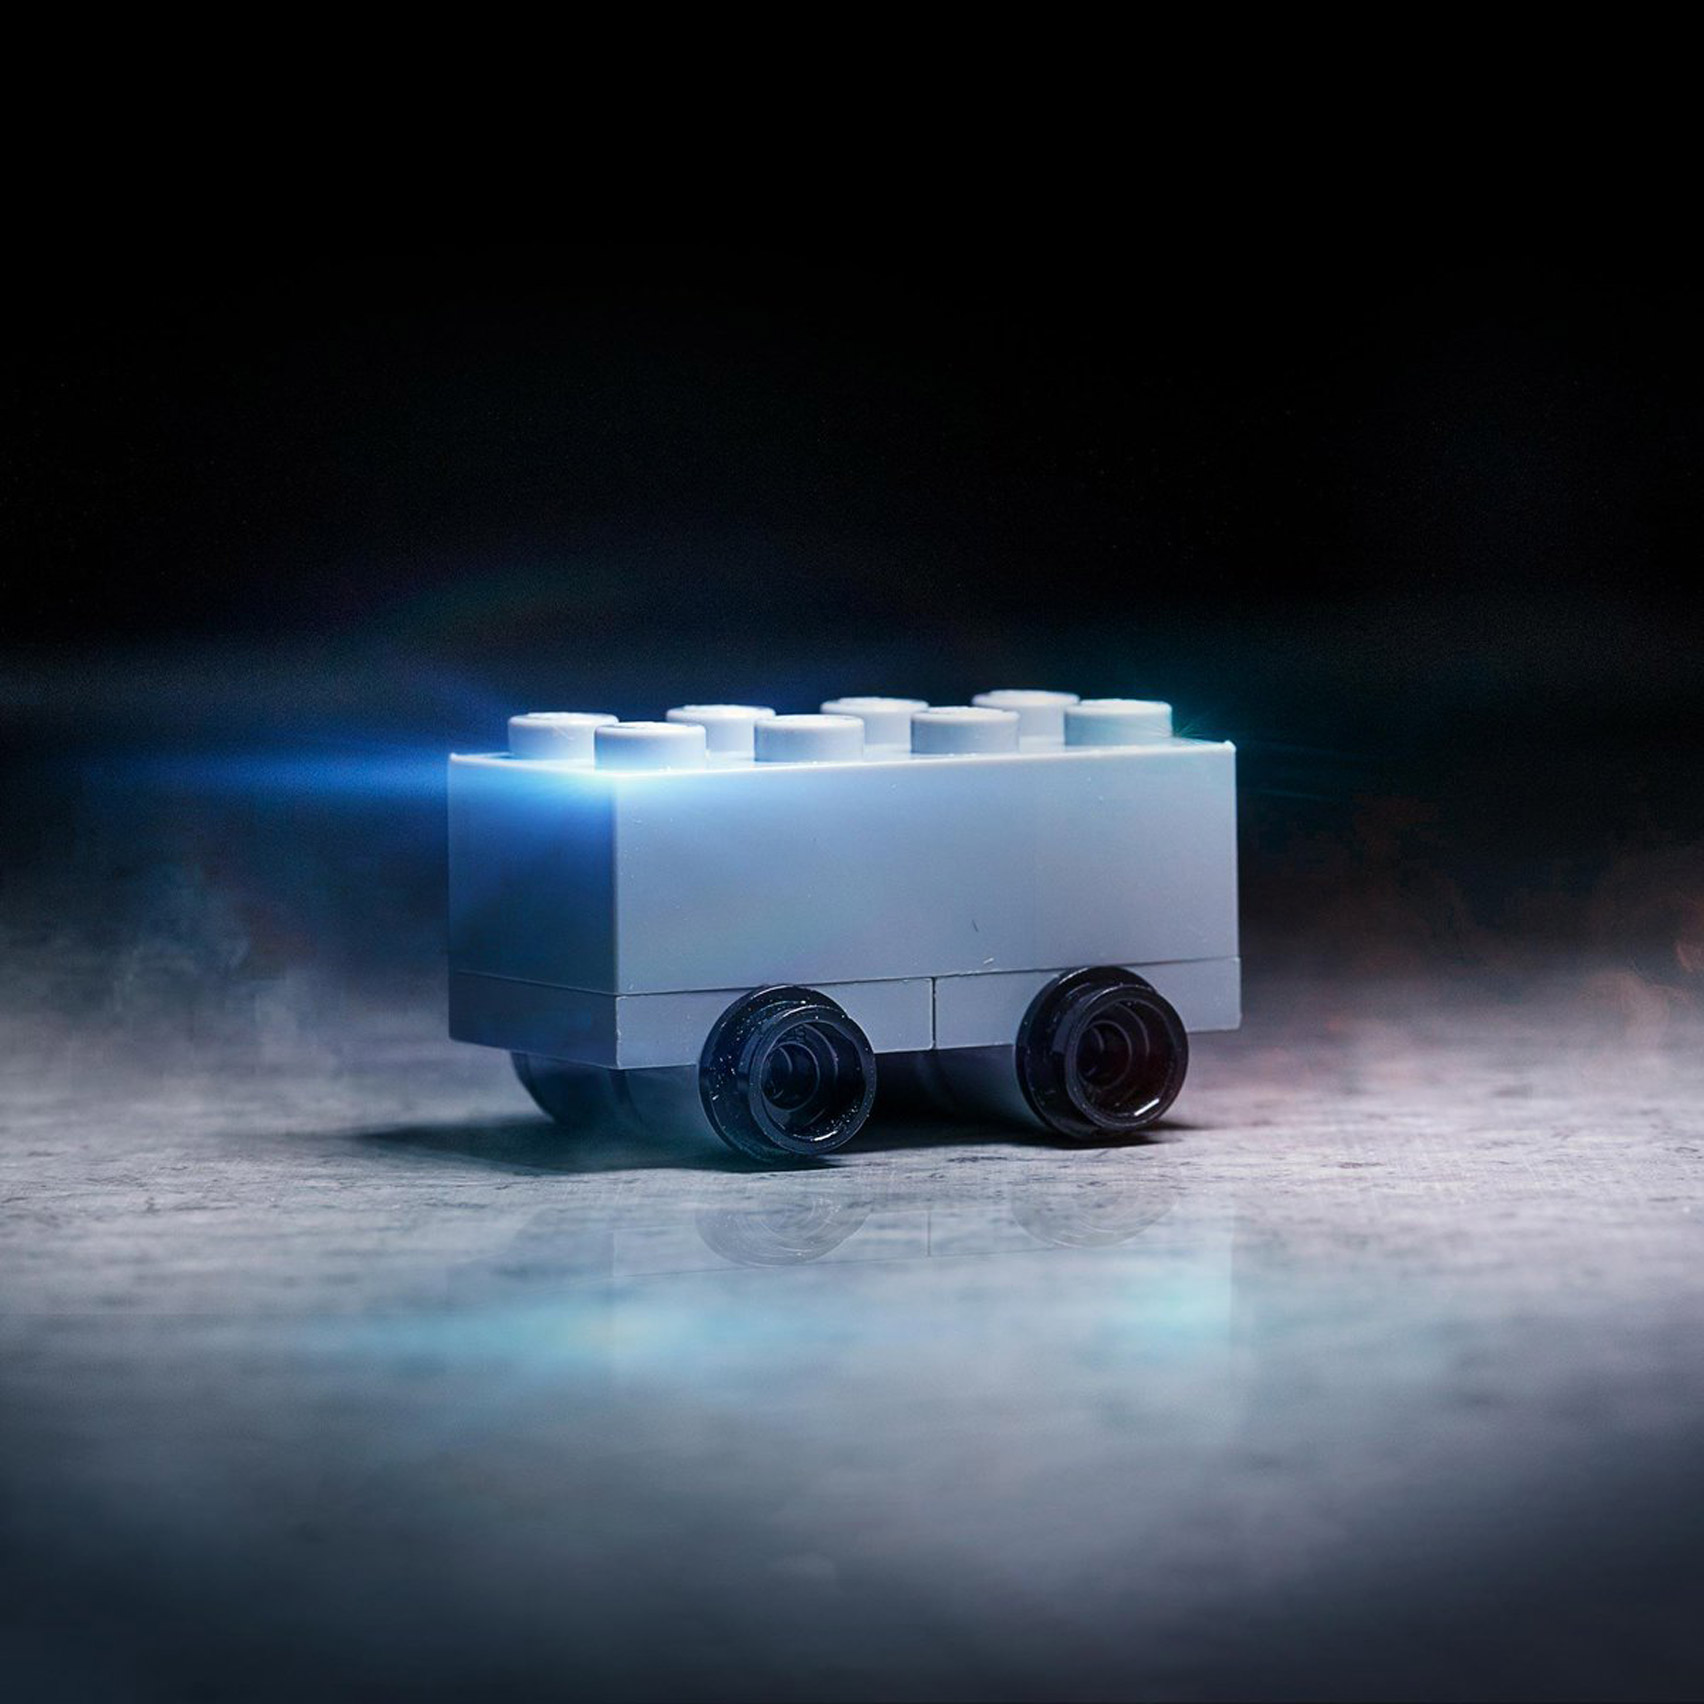 Lego Tesla with plastic brick model of Cybertruck